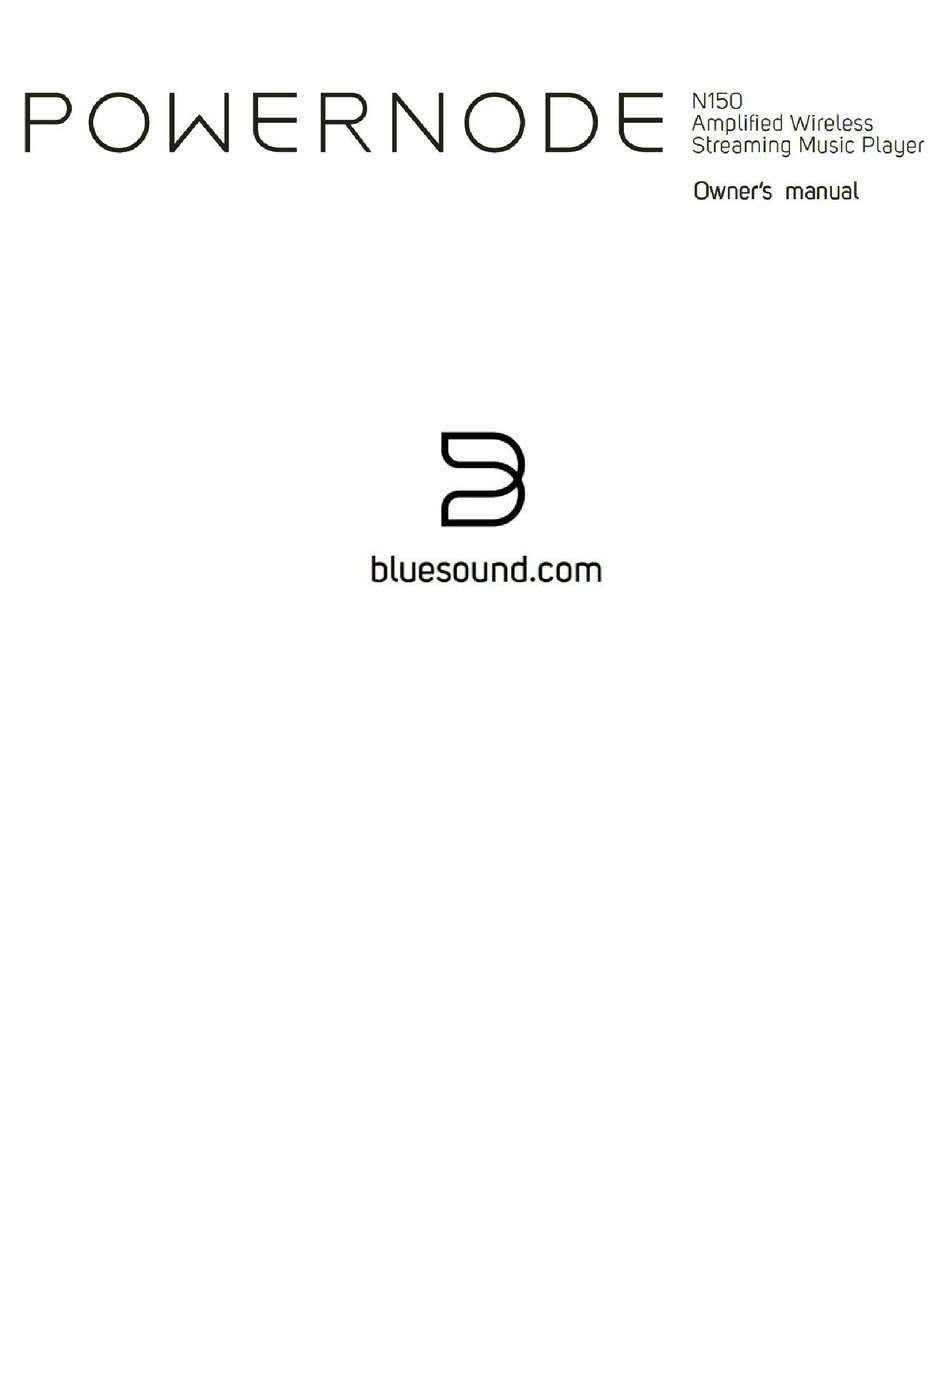 bluesound app manual pdf